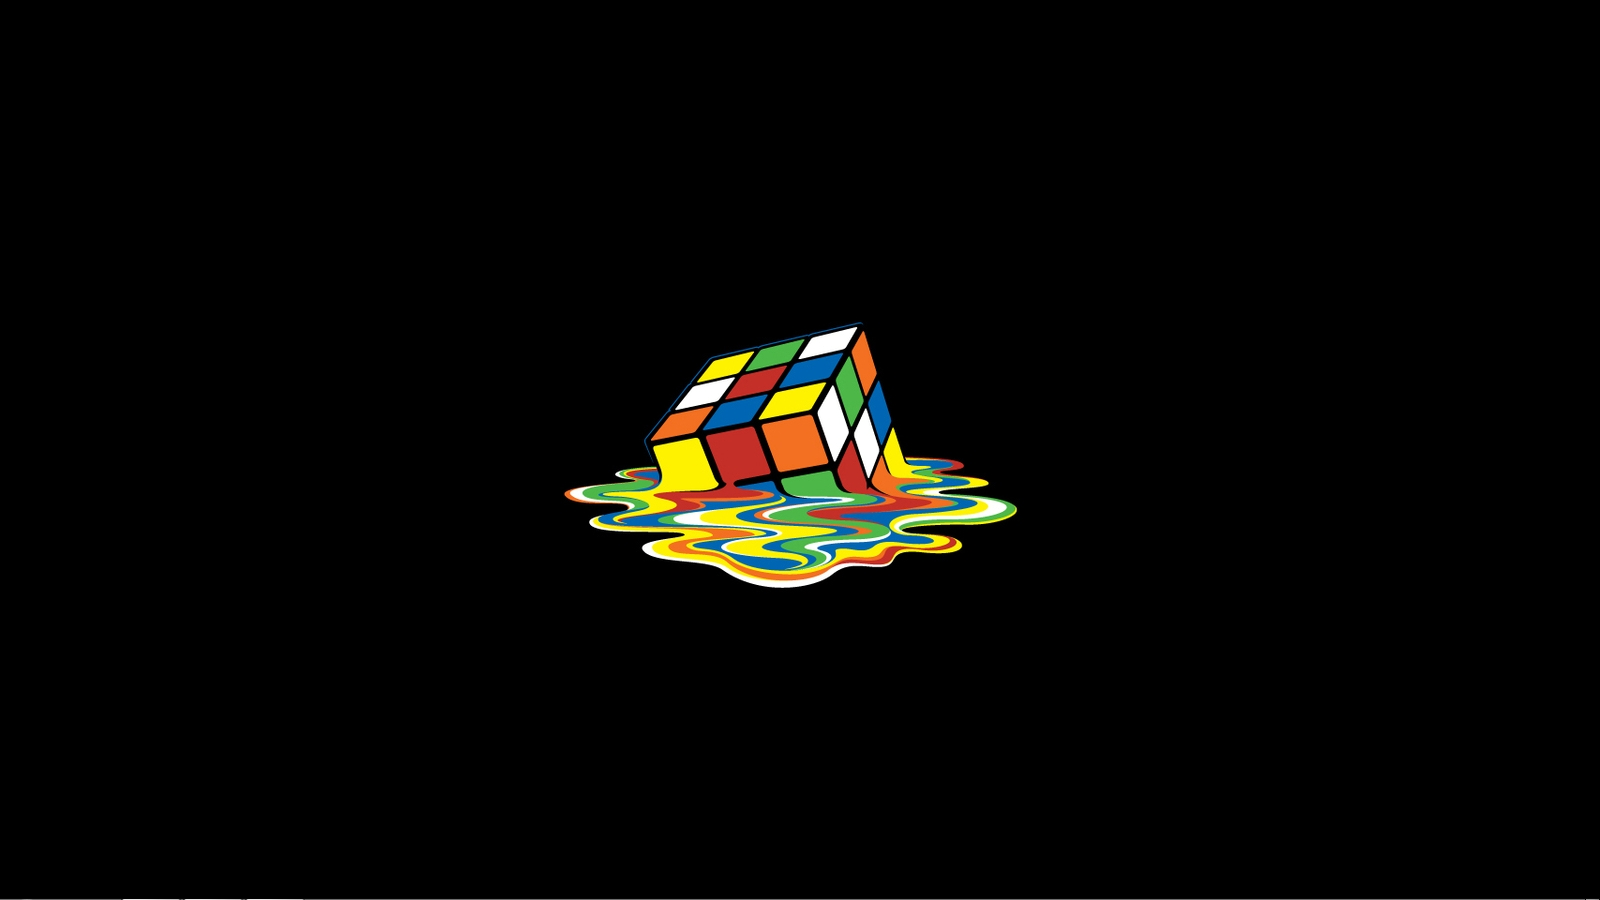 Rubiks cube wallpaper